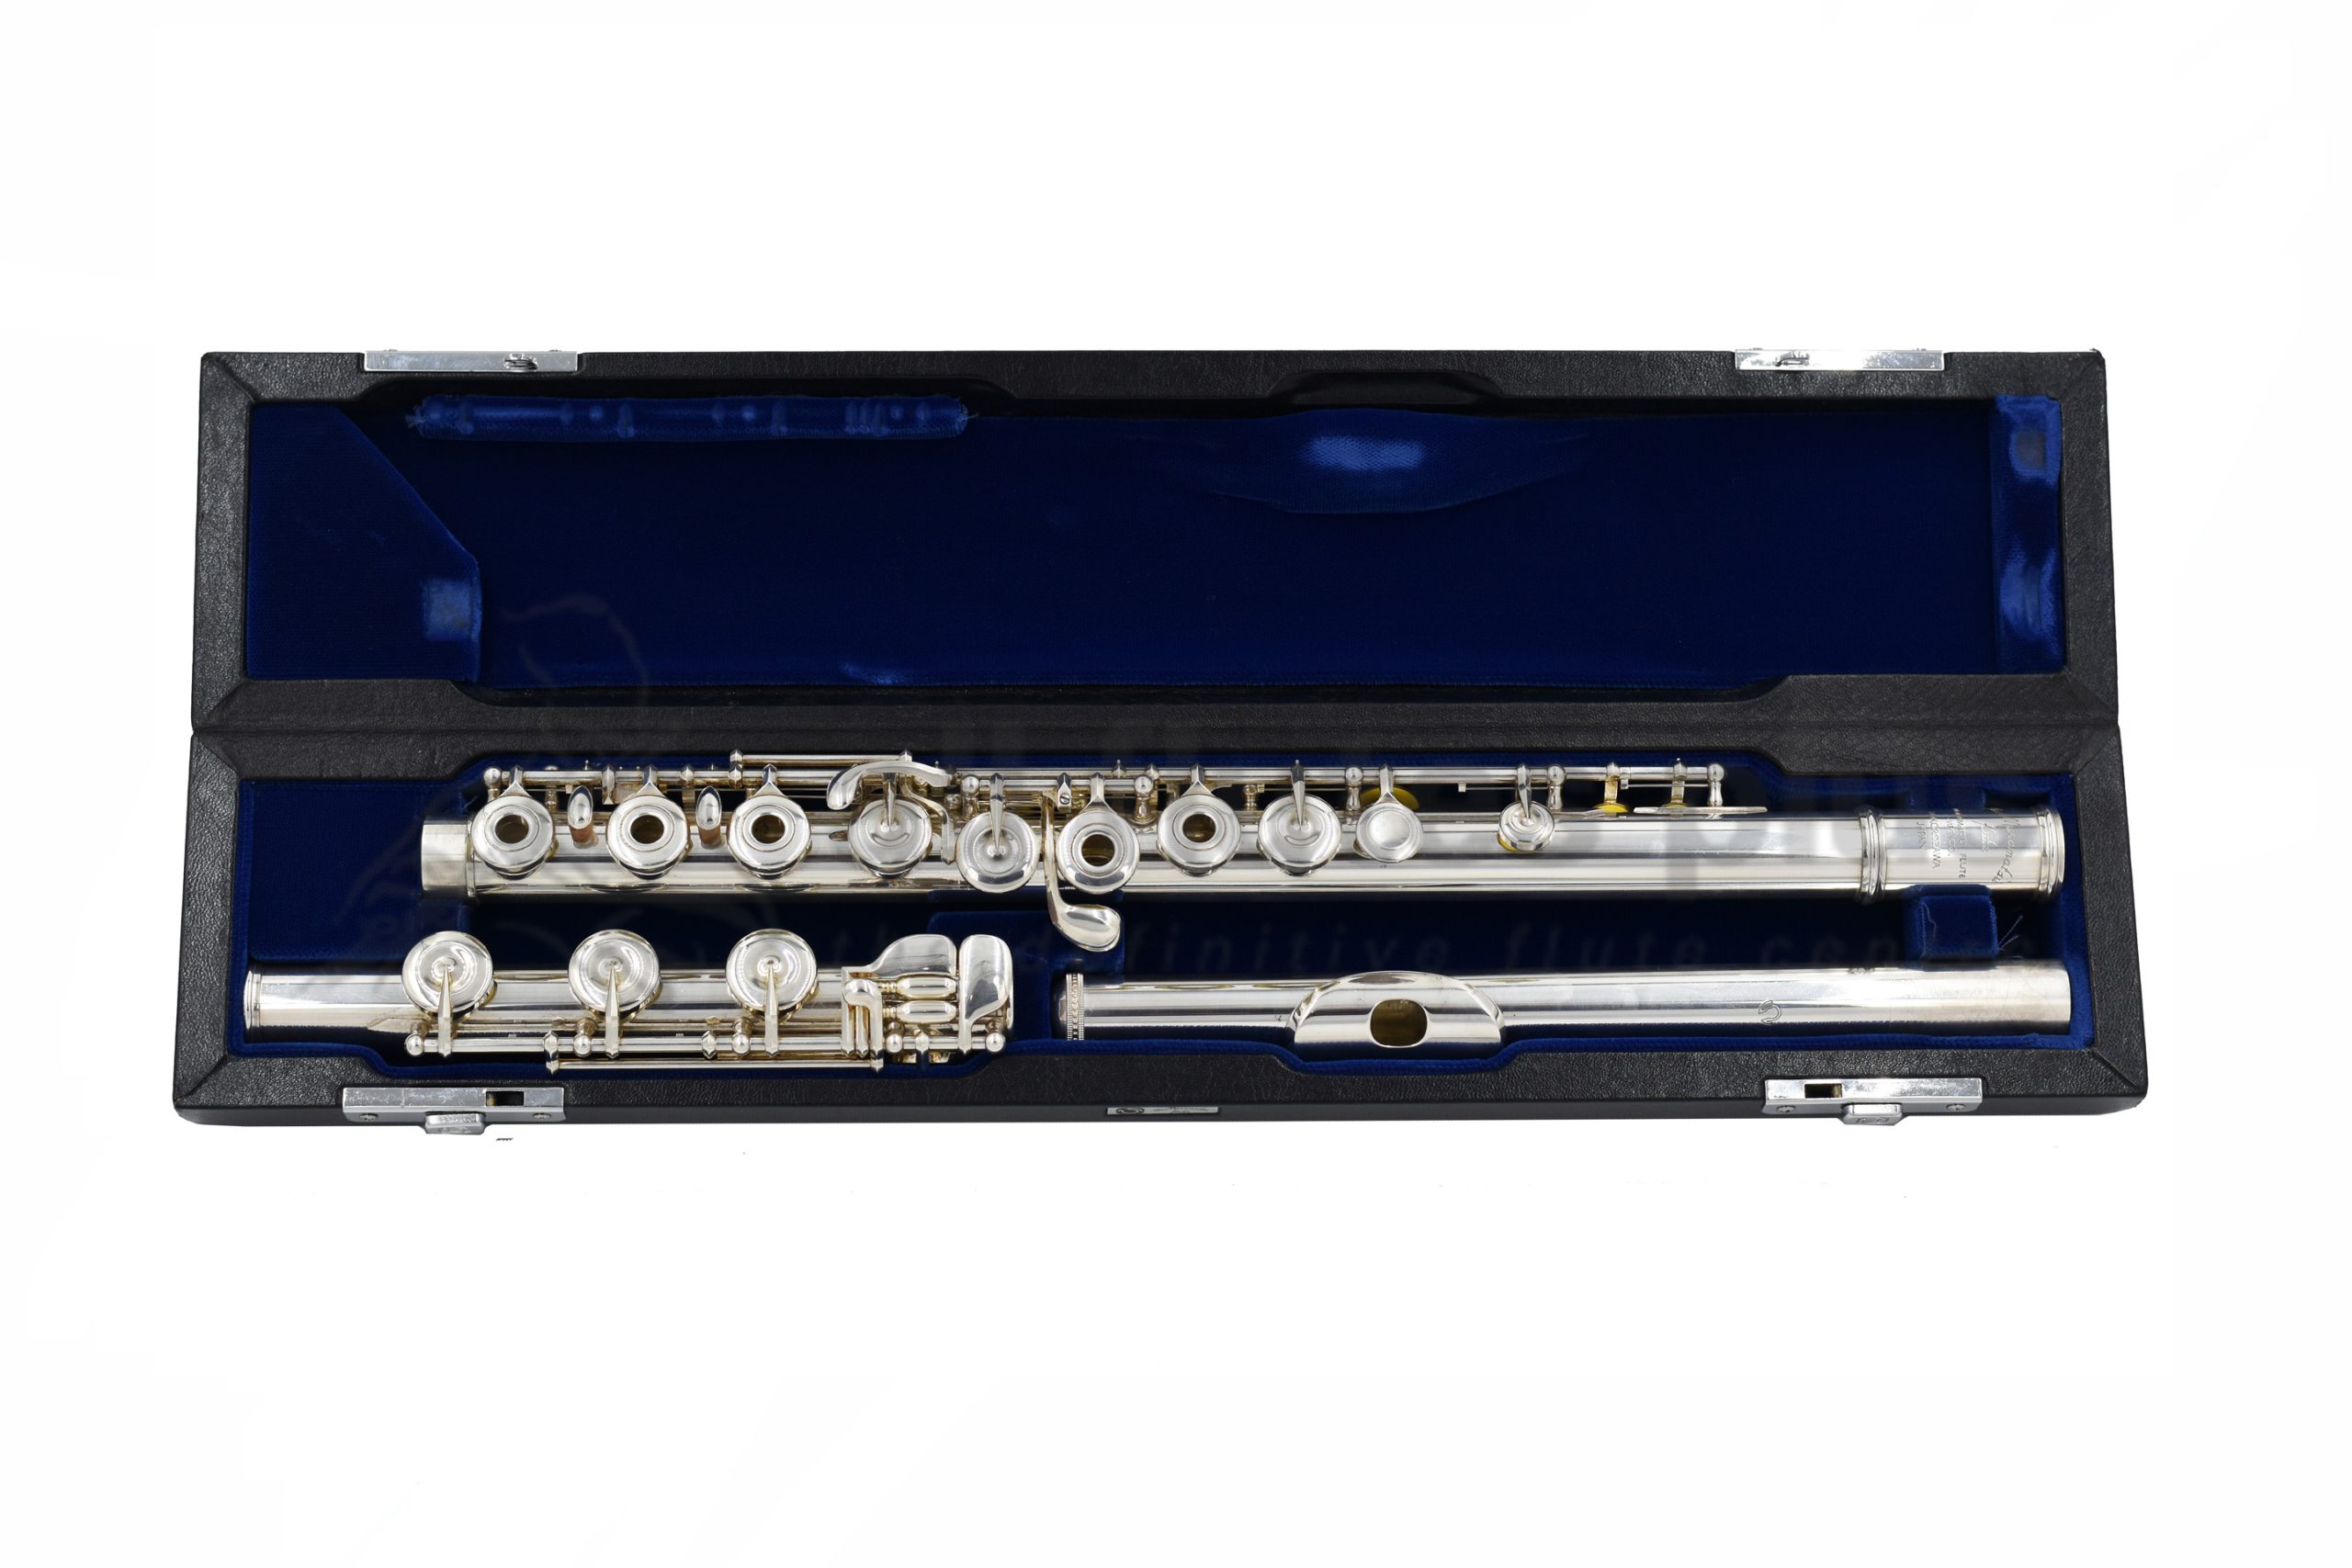 Muramatsu GXIII Pre-Owned Flute-c8570